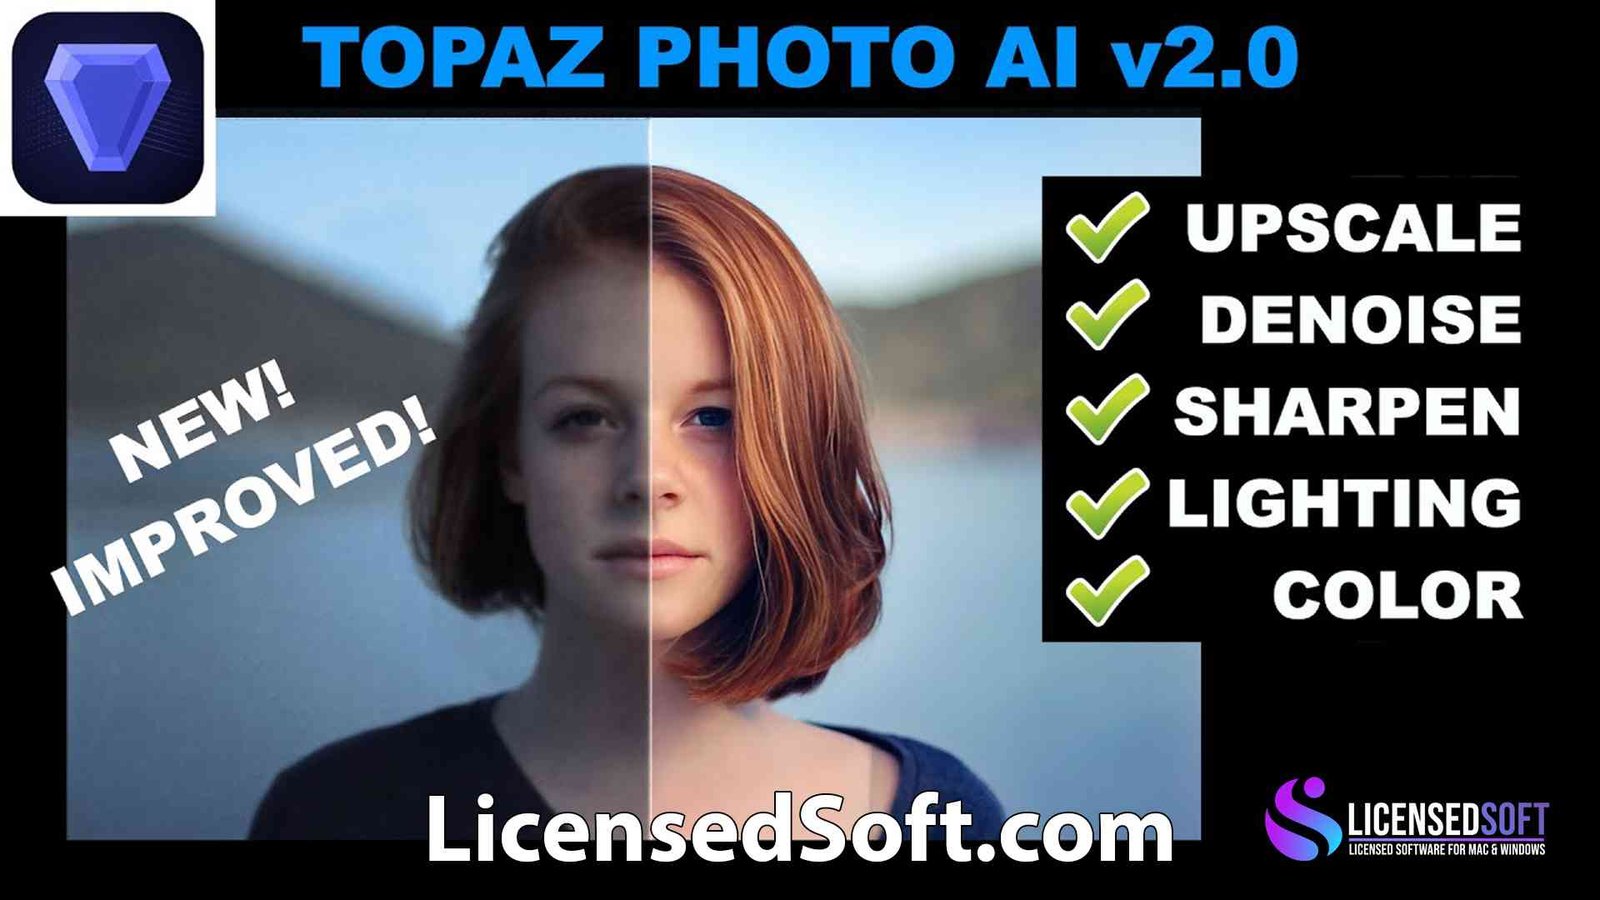 Topaz Photo AI 2.0.2 Full Premium Cover Image By LicensedSoft